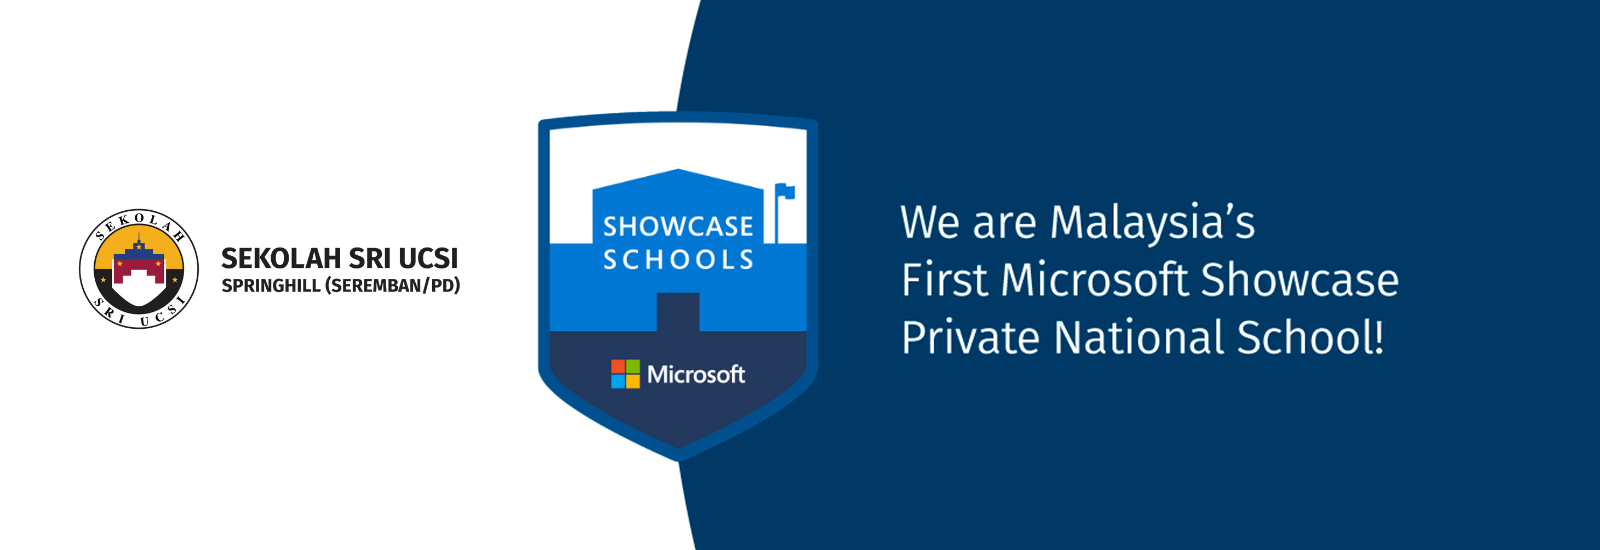 Malaysia's First Microsoft Showcase SchoolMalaysia's First Microsoft Showcase Private National School